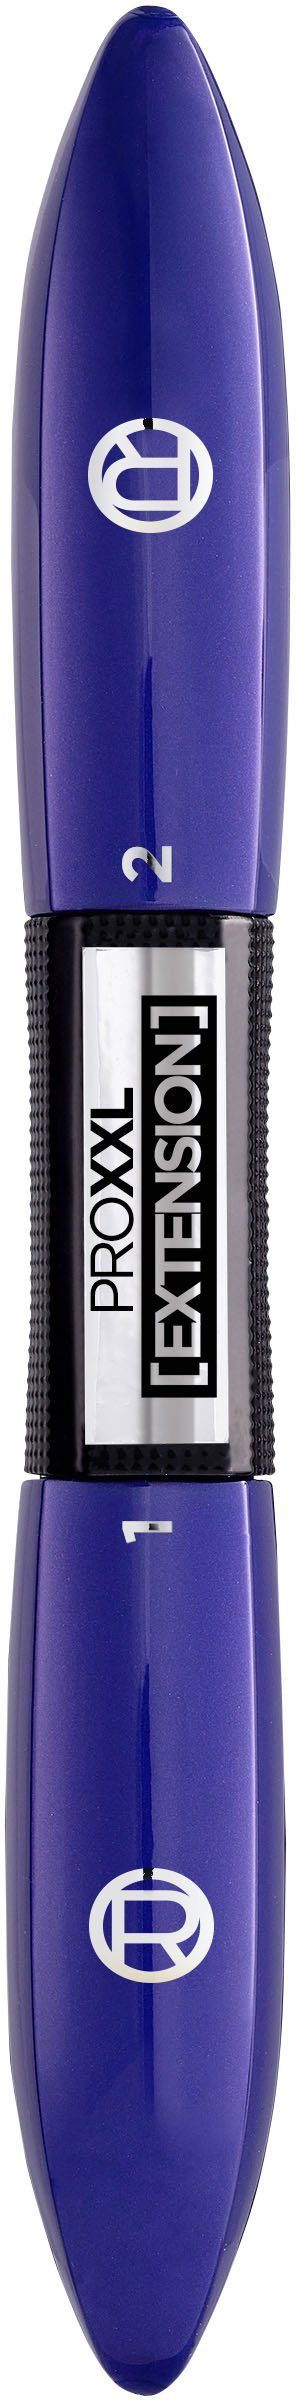 ProXXL Mascara Mascara L'ORÉAL Extension schwarz PARIS